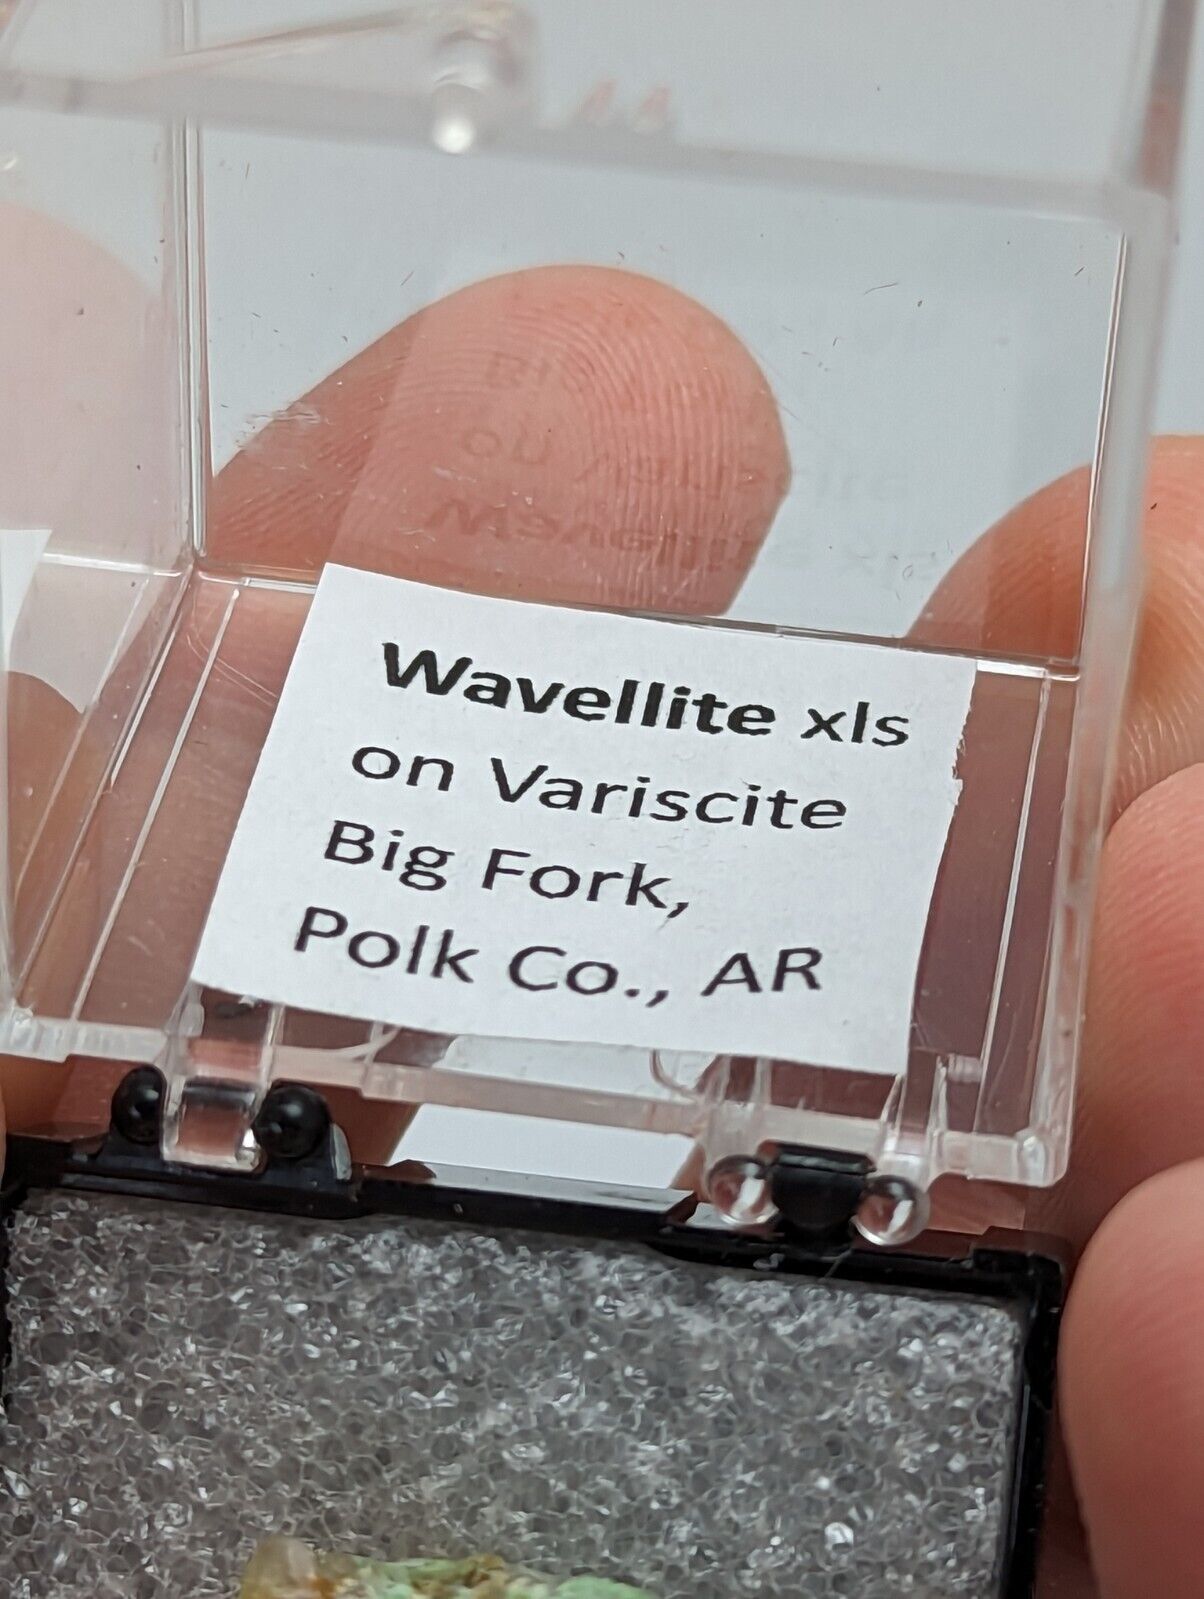 Super Rare old stock Wavellite on Variscite, Big Fork, Polk Co. Arkansas, USA